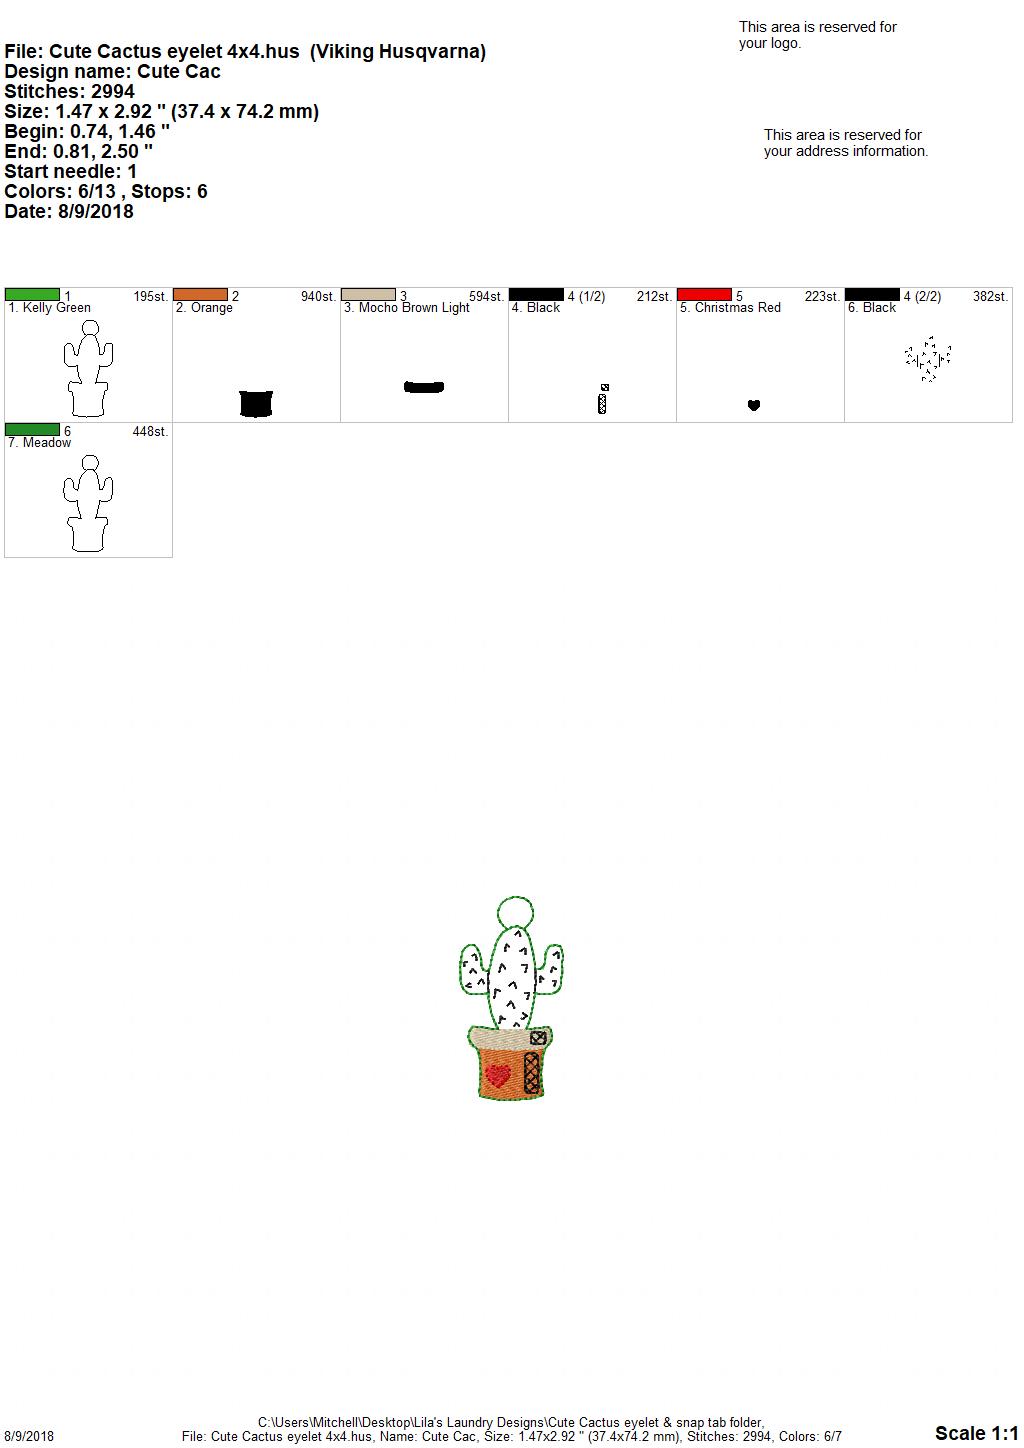 Cactus Fobs - Digital Embroidery Design